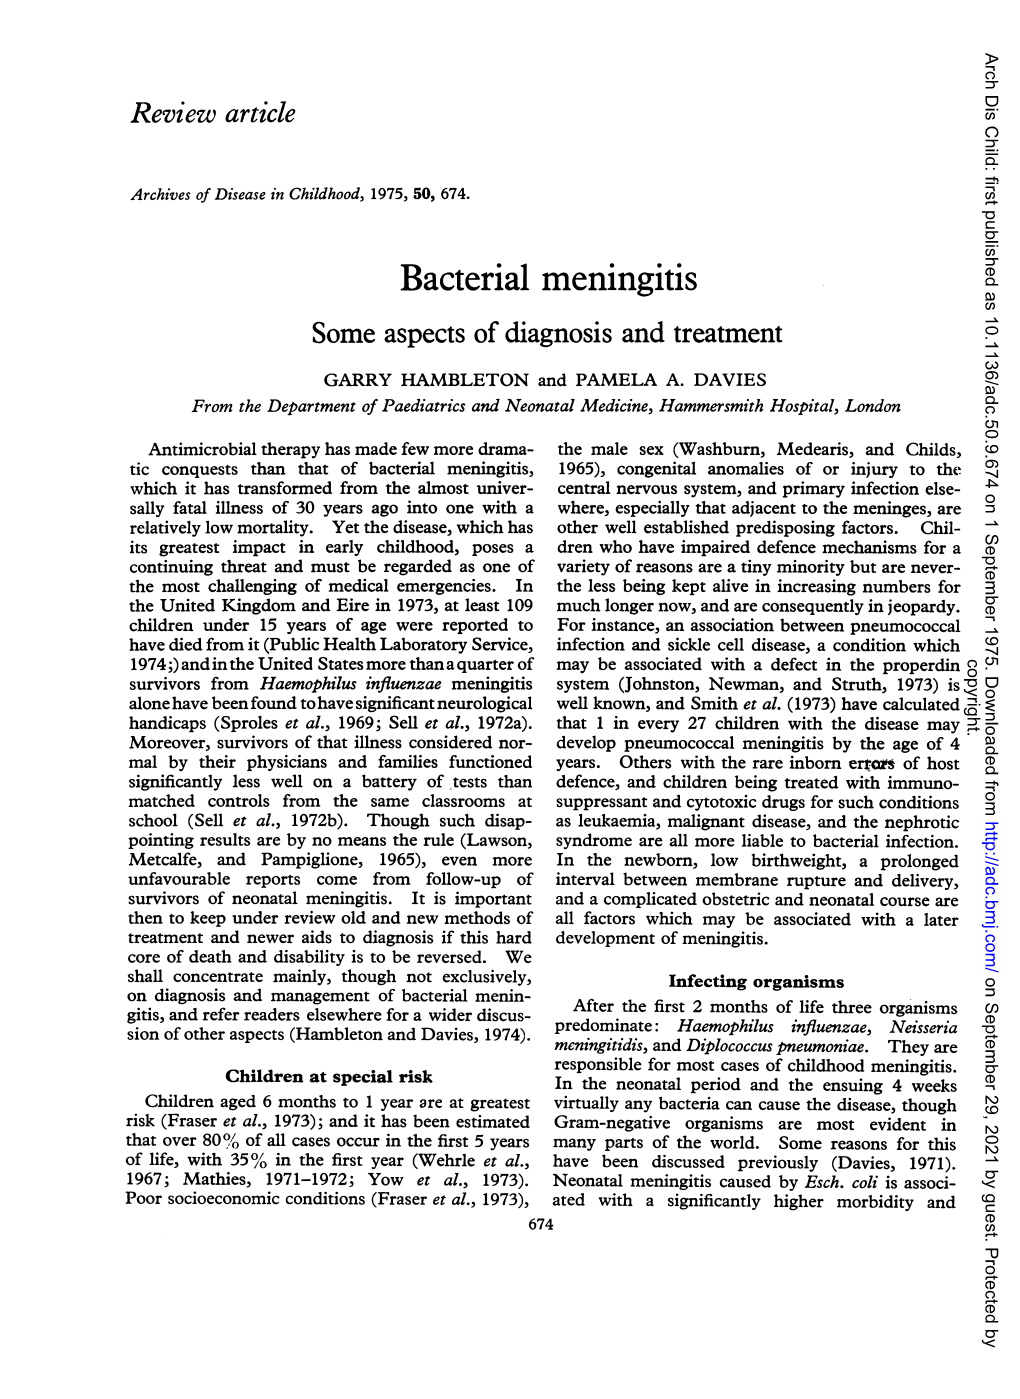 Bacterial Meningitis Some Aspects of Diagnosis and Treatment GARRY HAMBLETON and PAMELA A